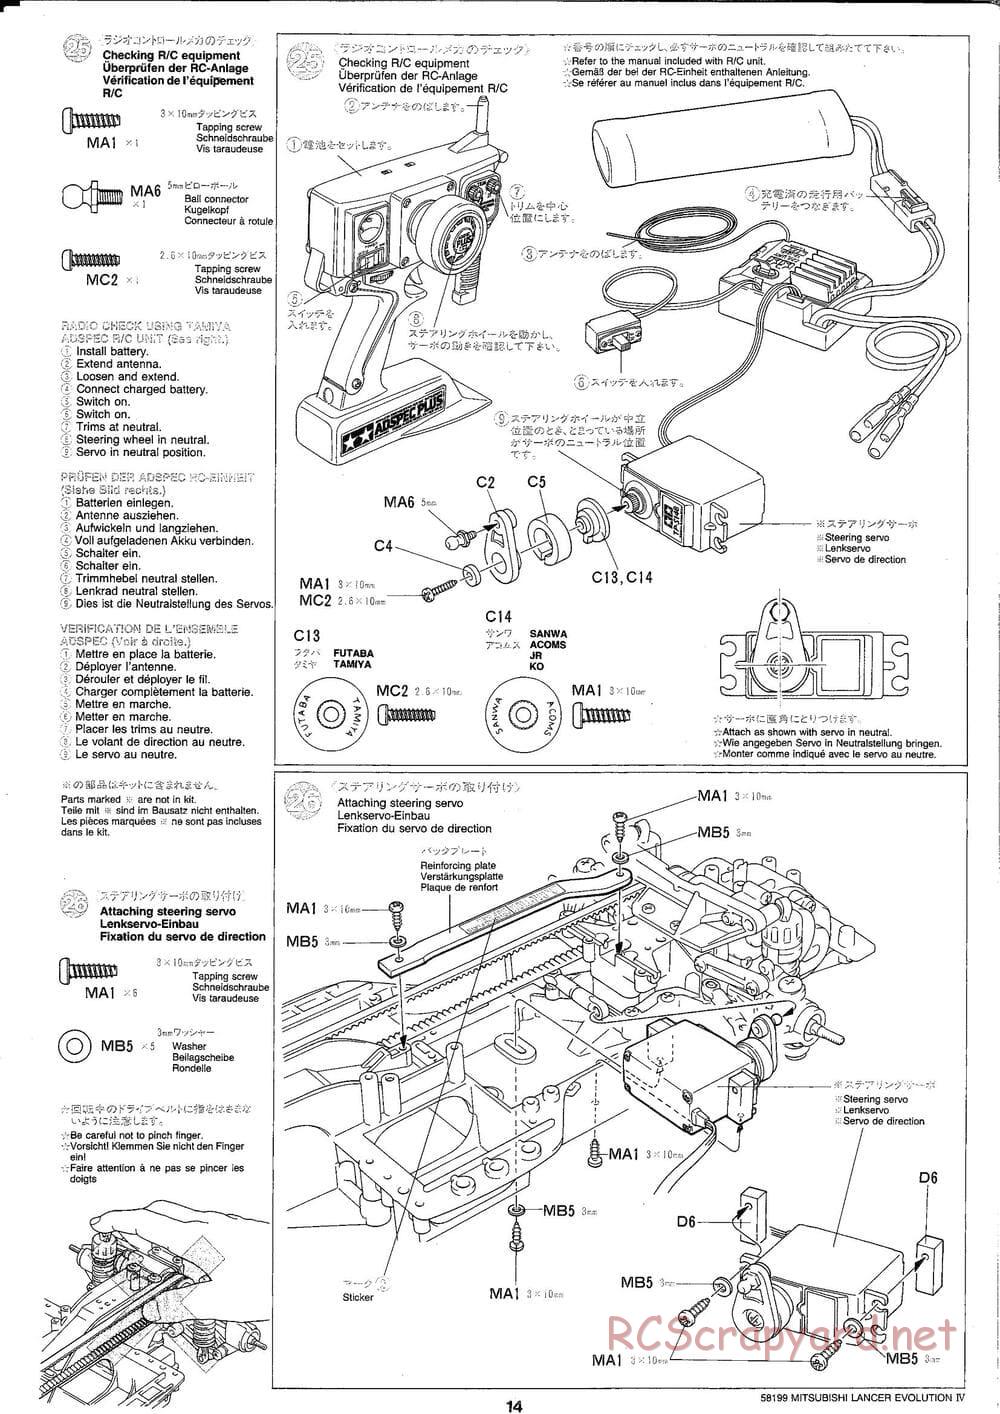 Tamiya - Mitsubishi Lancer Evolution IV - TA-03F Chassis - Manual - Page 14